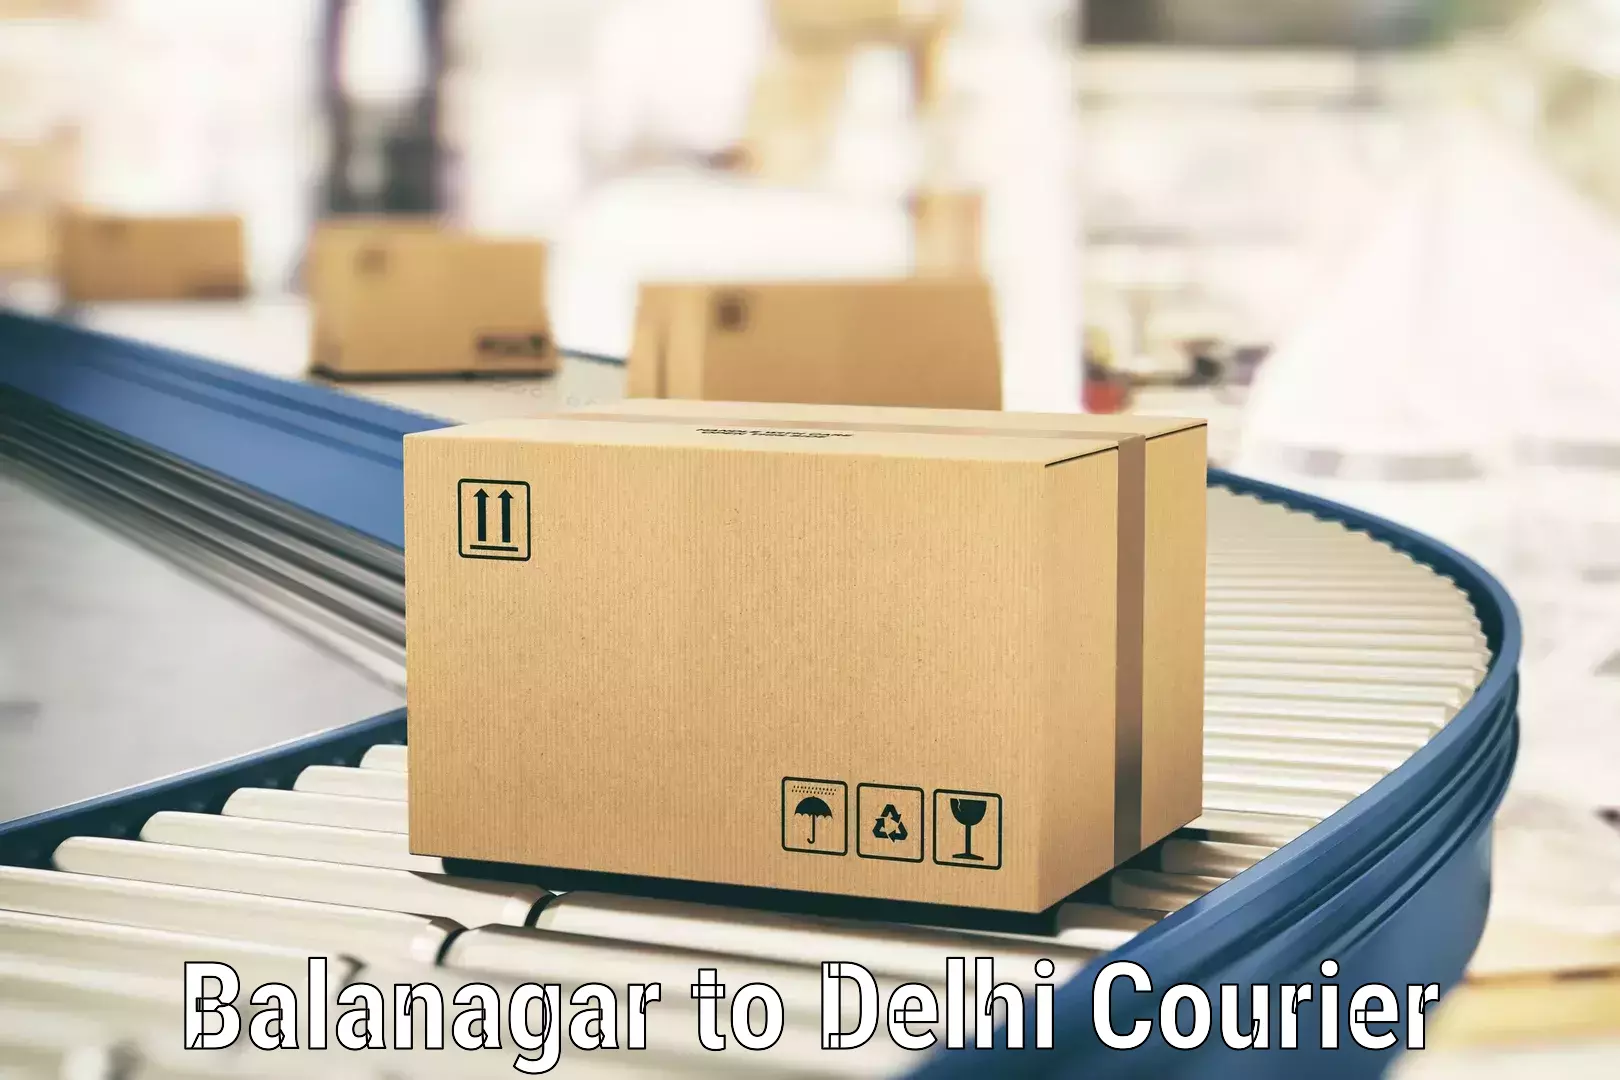 Express delivery network Balanagar to IIT Delhi